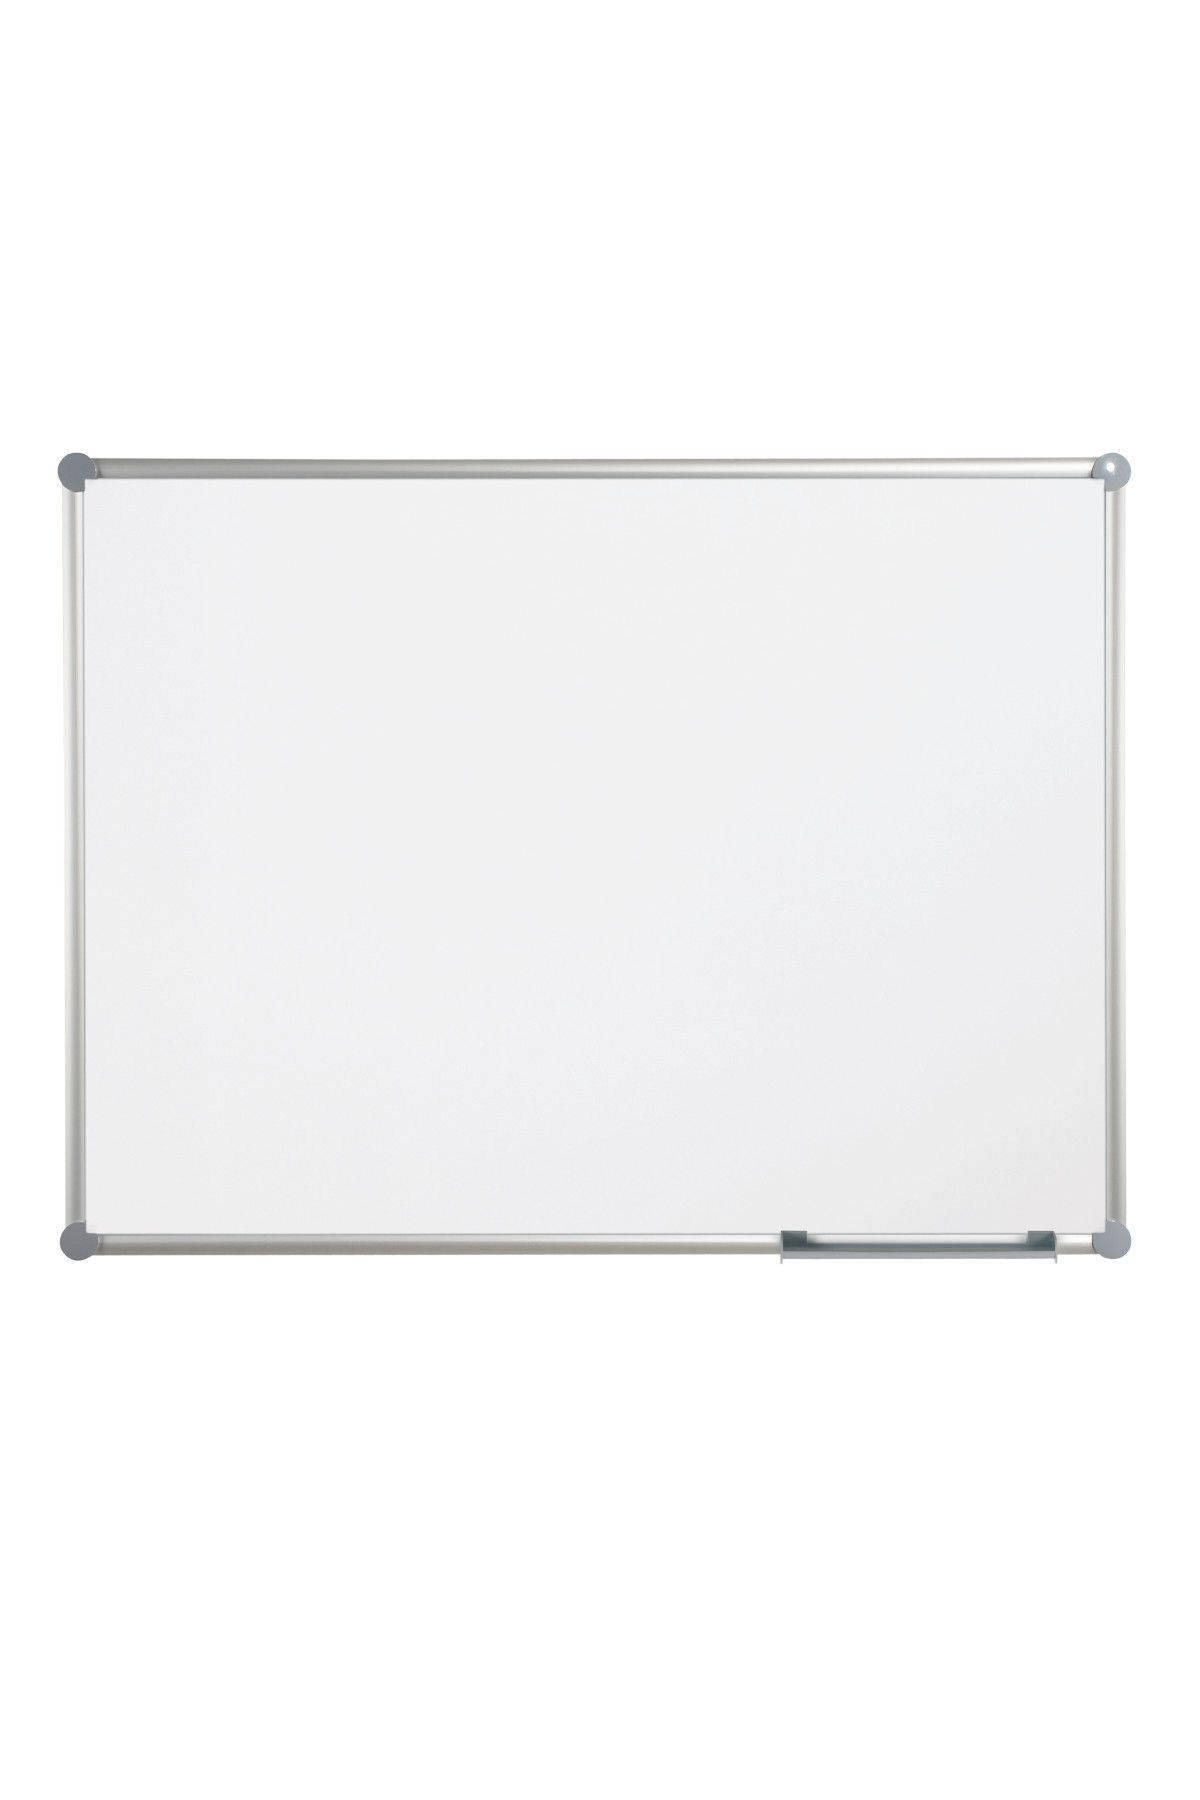 Whiteboard 2000 MAULpro, 60x90 cm 